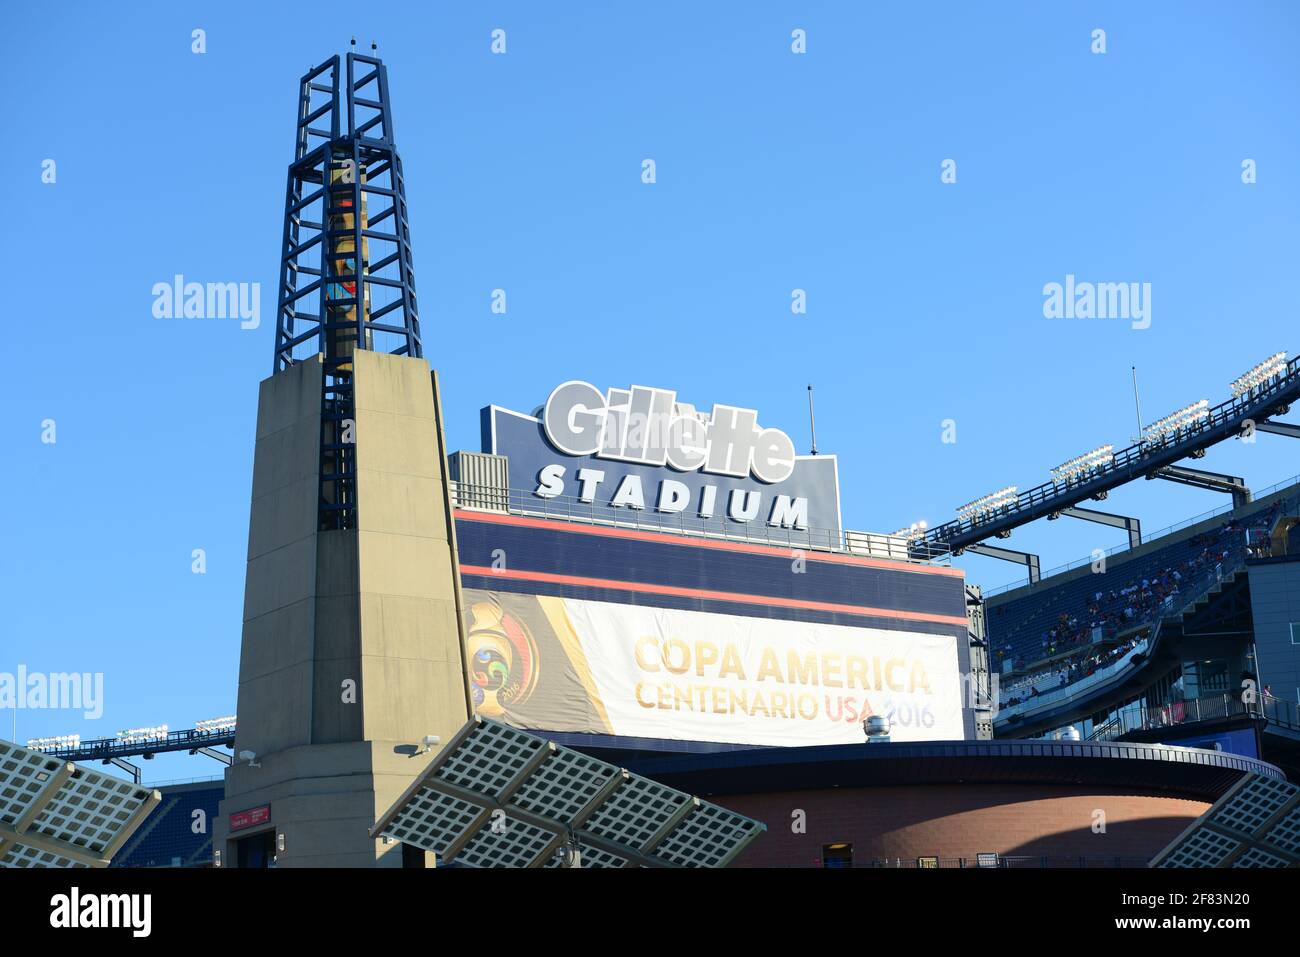 Gillette Stadium entrance sign, Foxborough, Greater Boston Area, Massachusetts MA, USA. Stock Photo